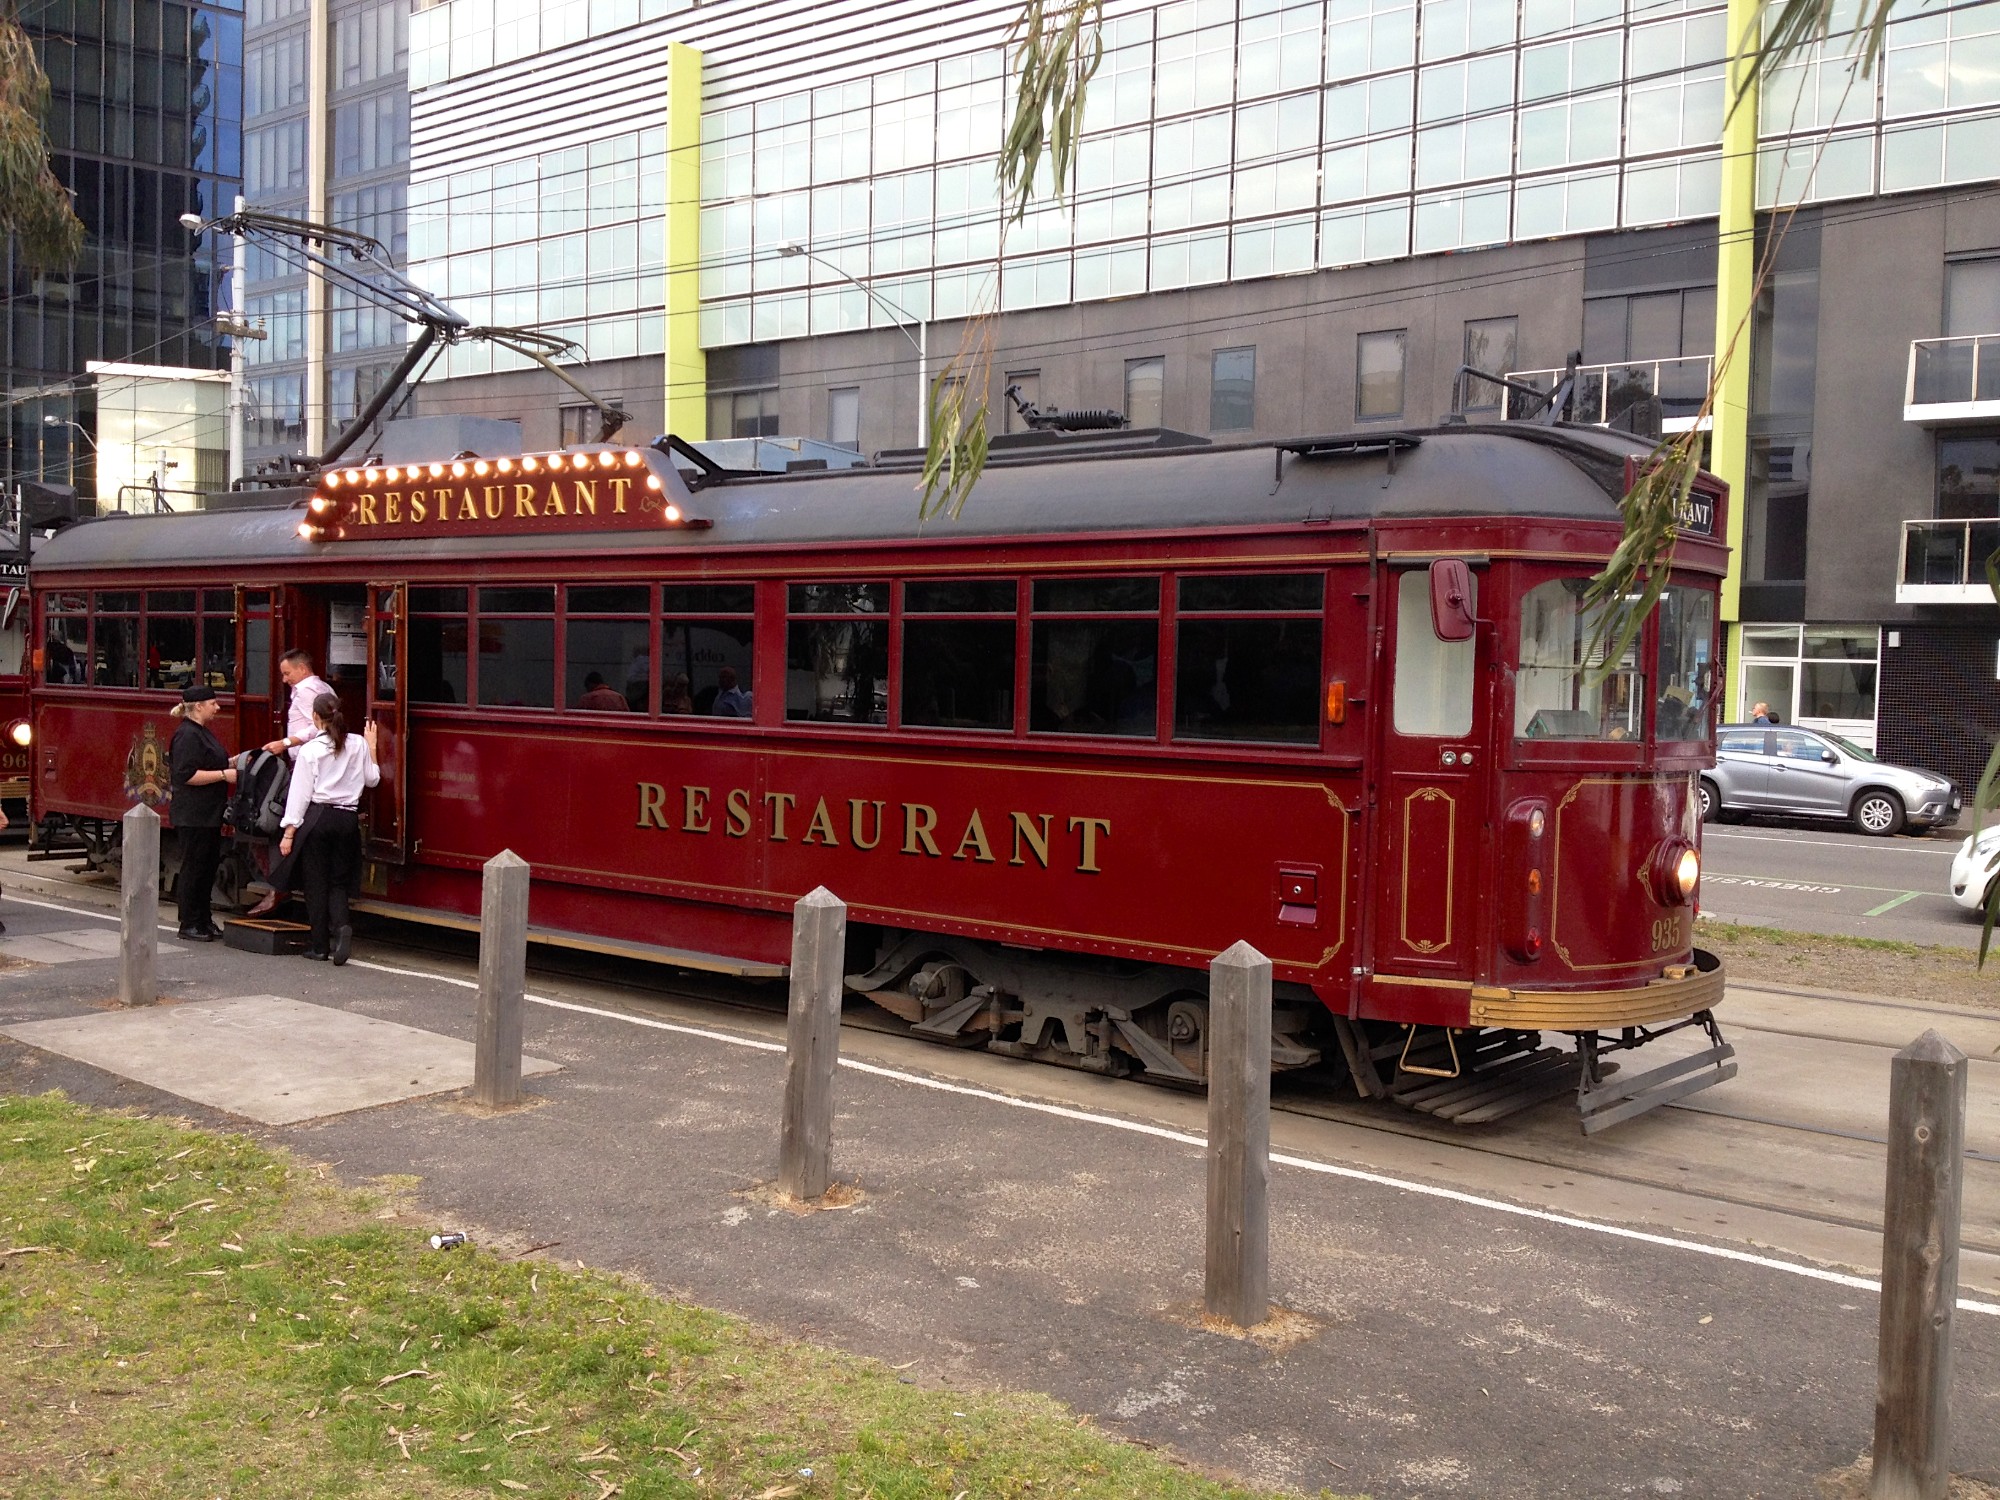 Restaurant Tram